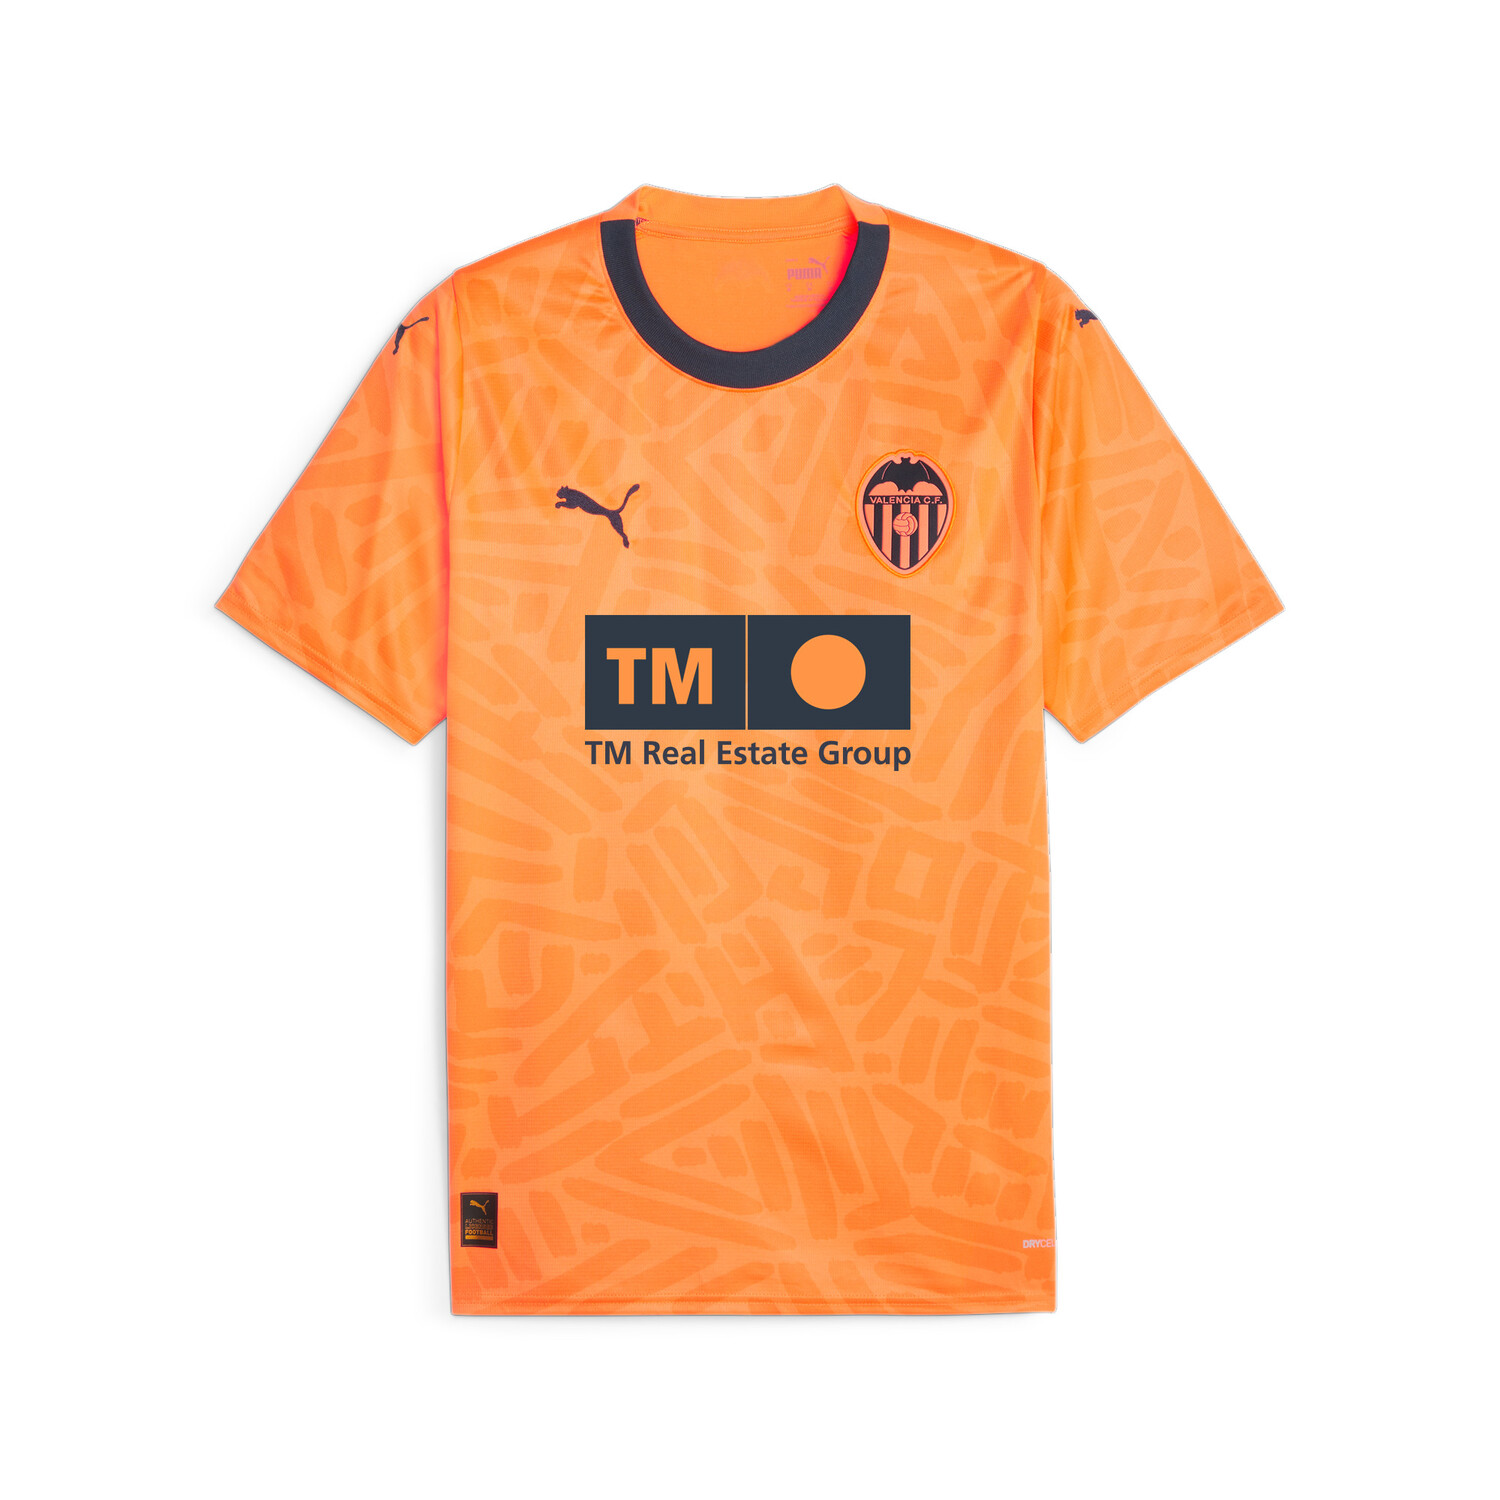 Camiseta Oficial 2ª Valencia FC. Adidas, Camisa Valencia FC naranja, camiseta naranja valencia